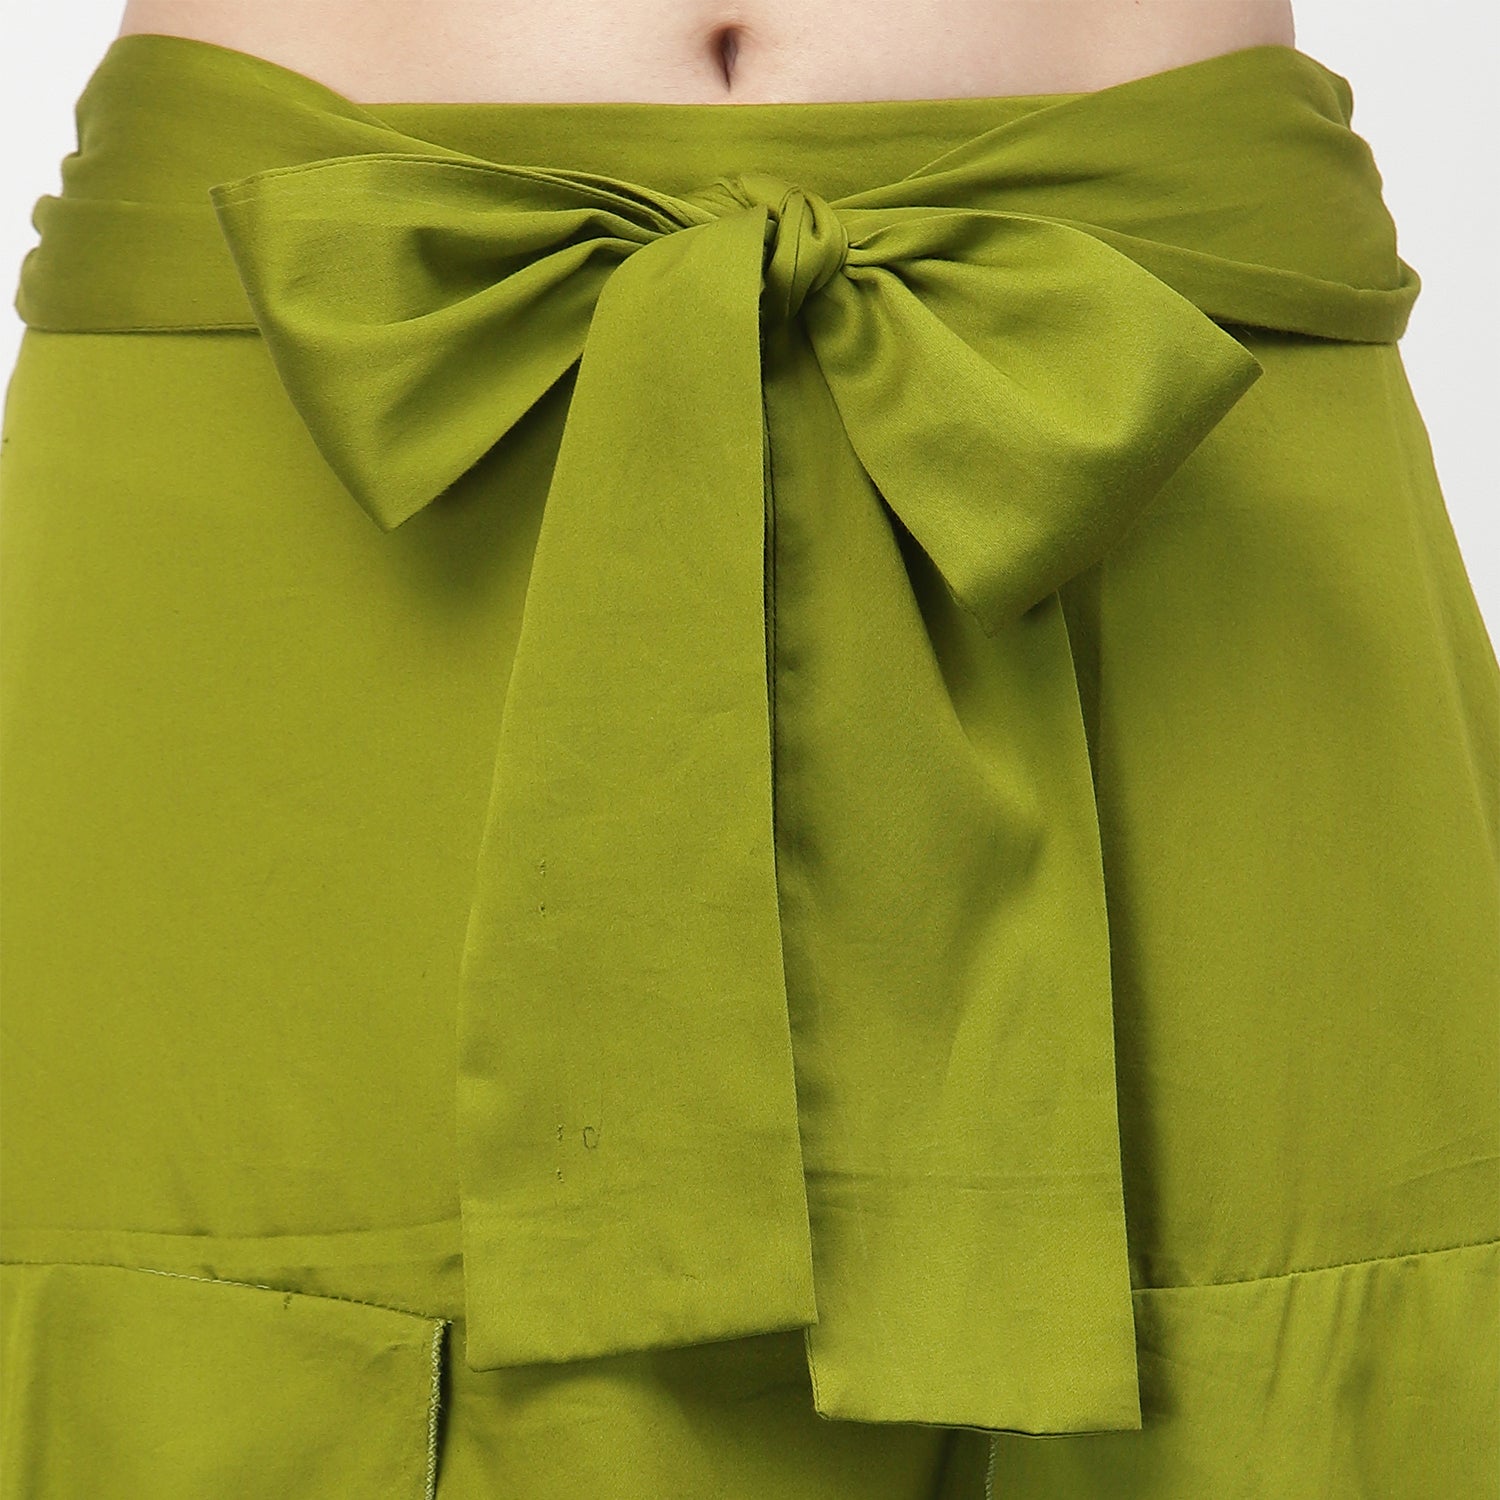 Olive Layered Skirt